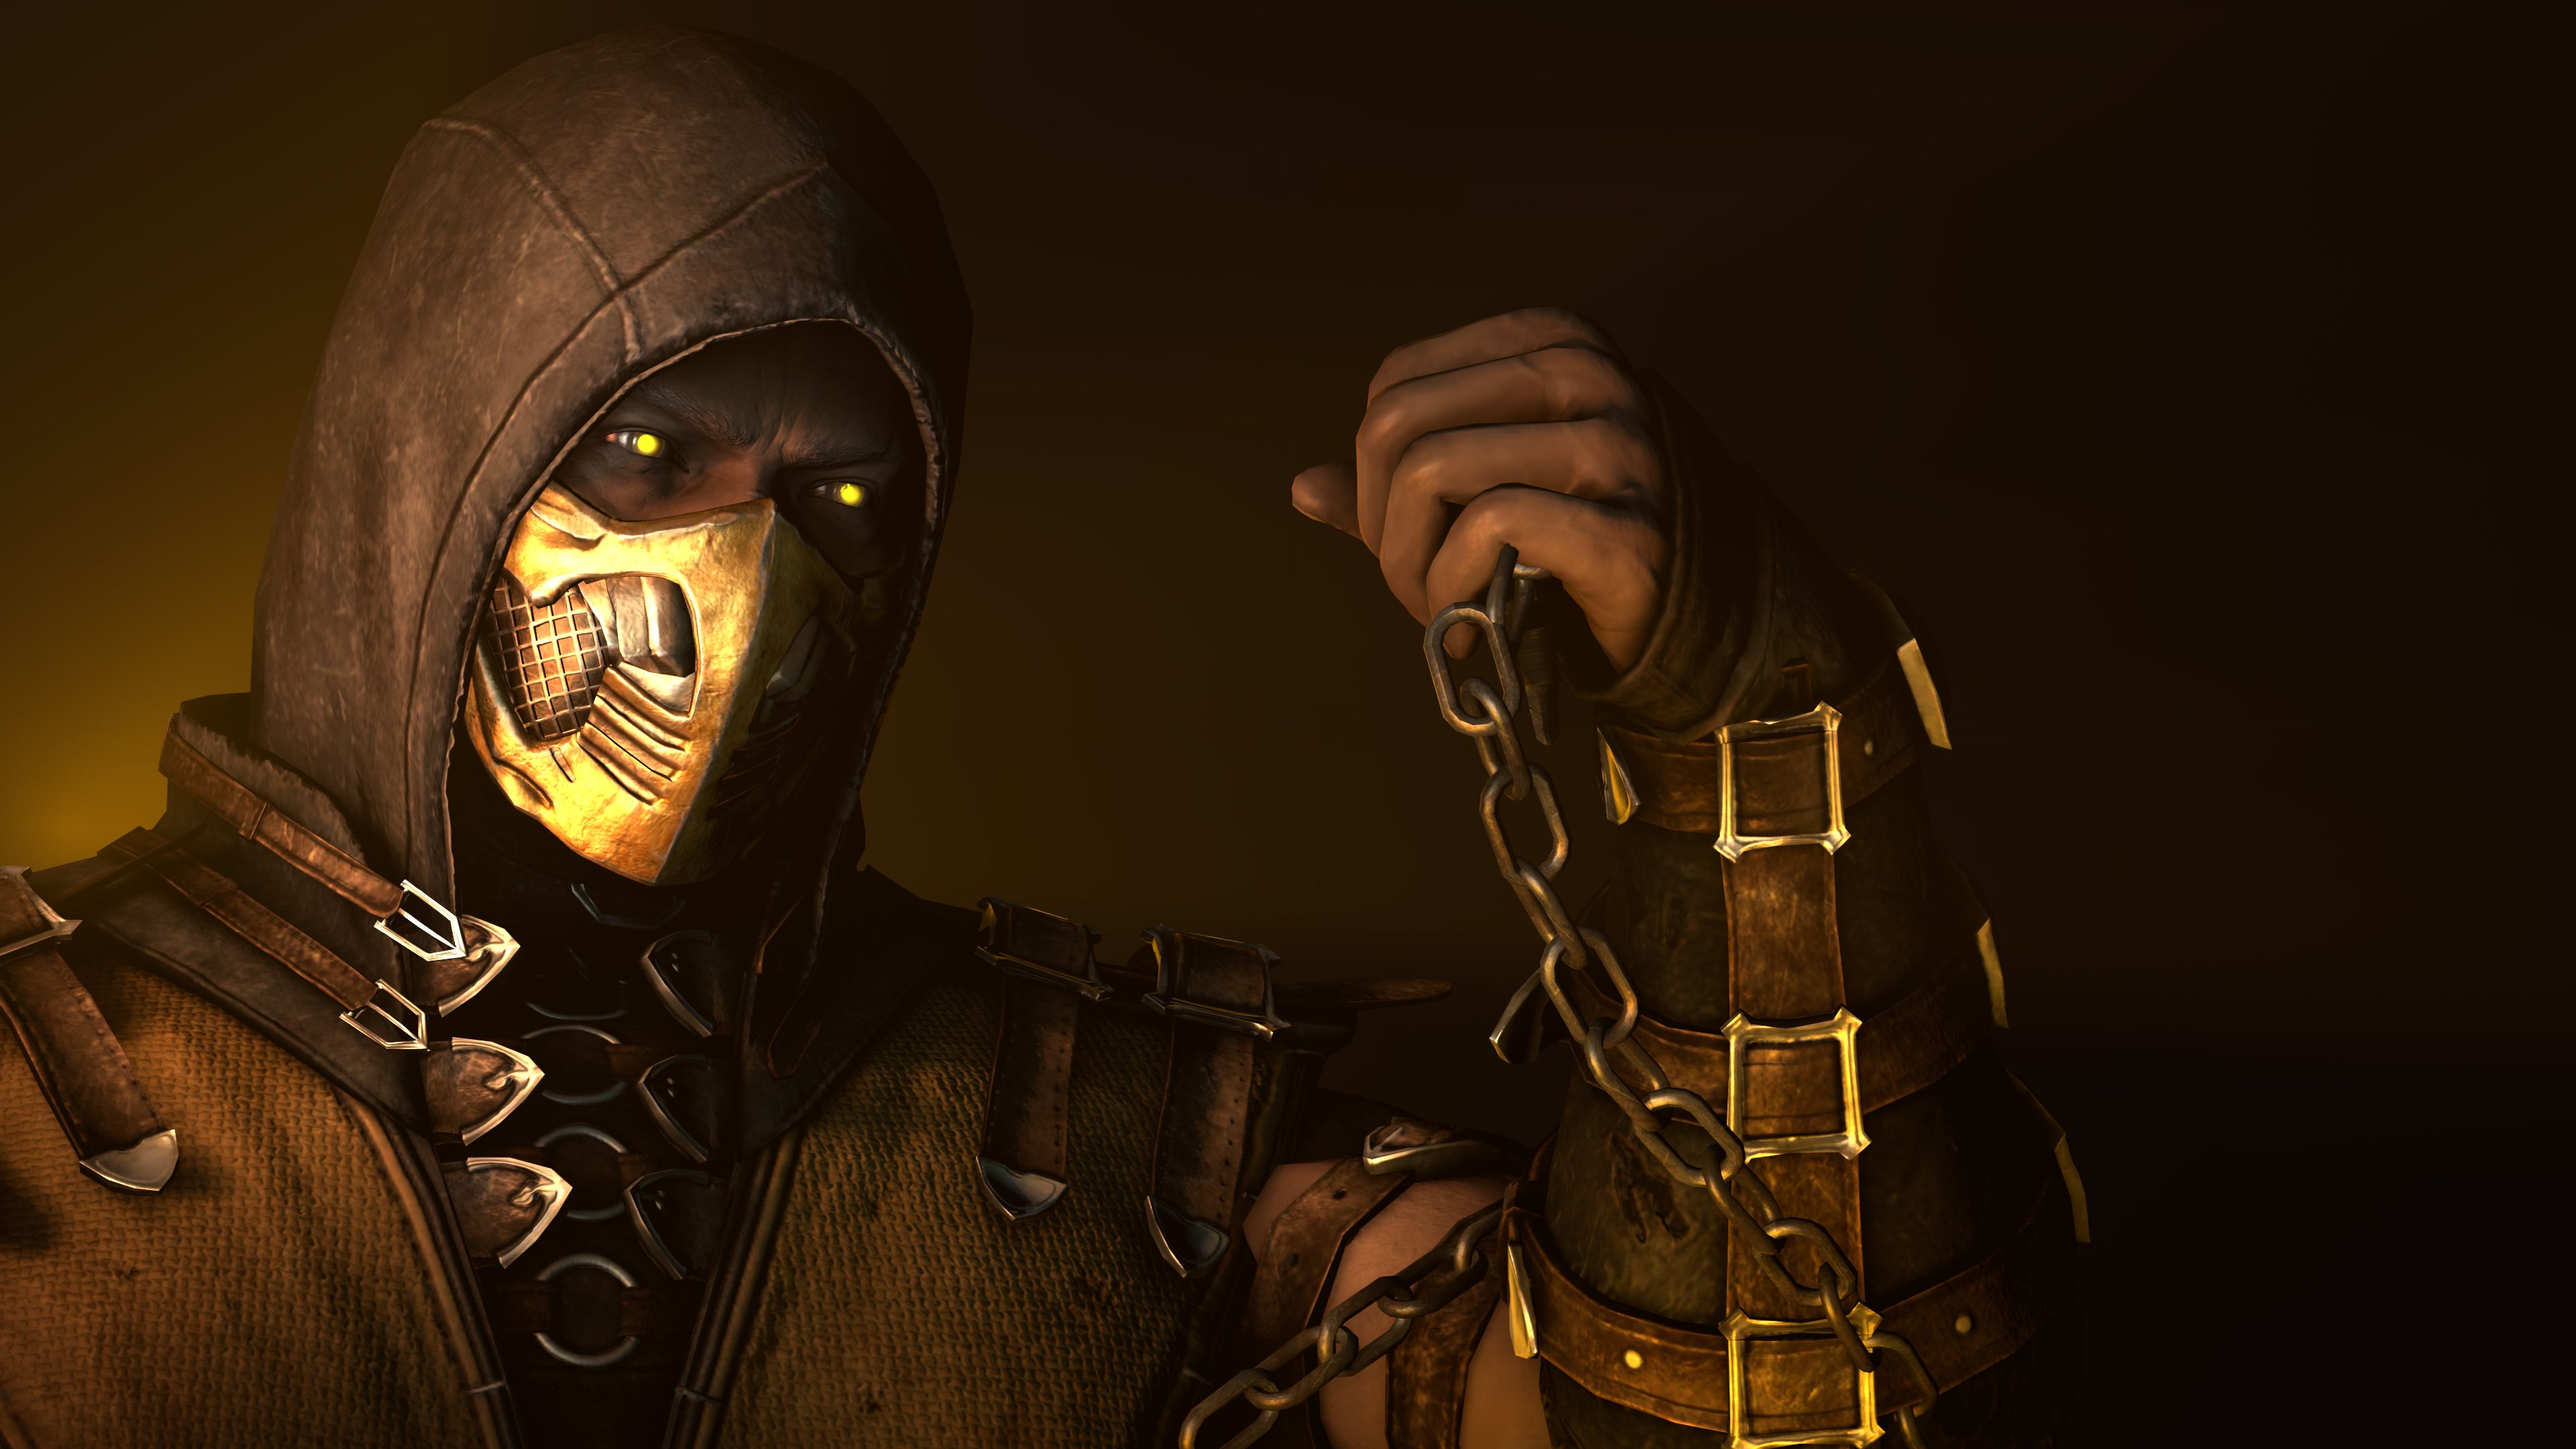 Scorpion Mortal Kombat X Poster, HD Games, 4k Wallpapers, Image